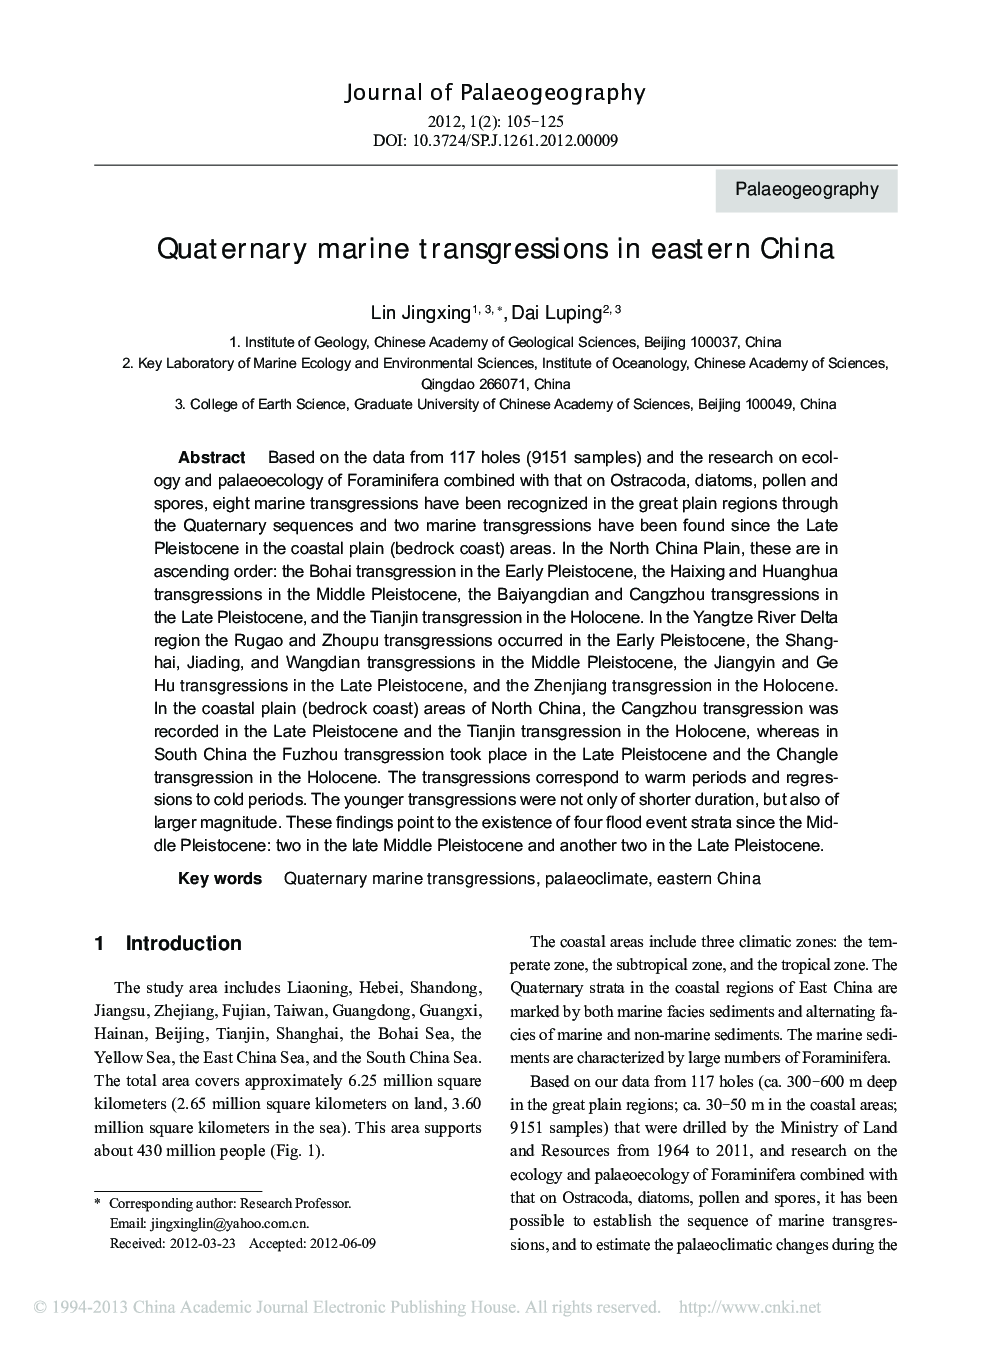 Quaternary marine transgressions in eastern China